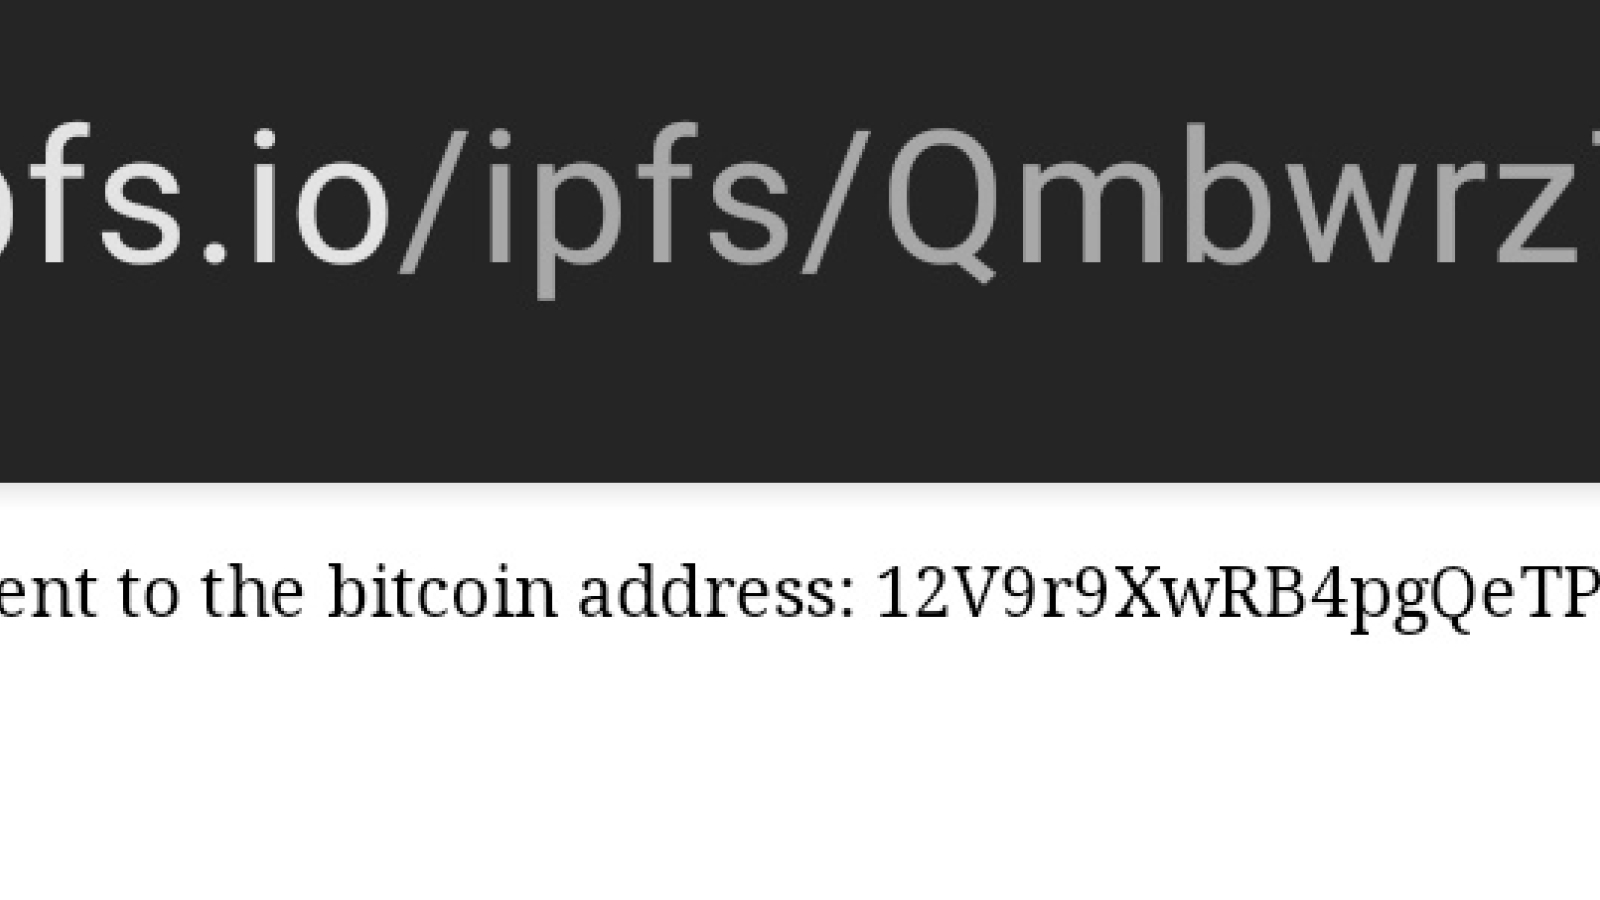 Bitcoin (BTC) is sent via the IPFS network